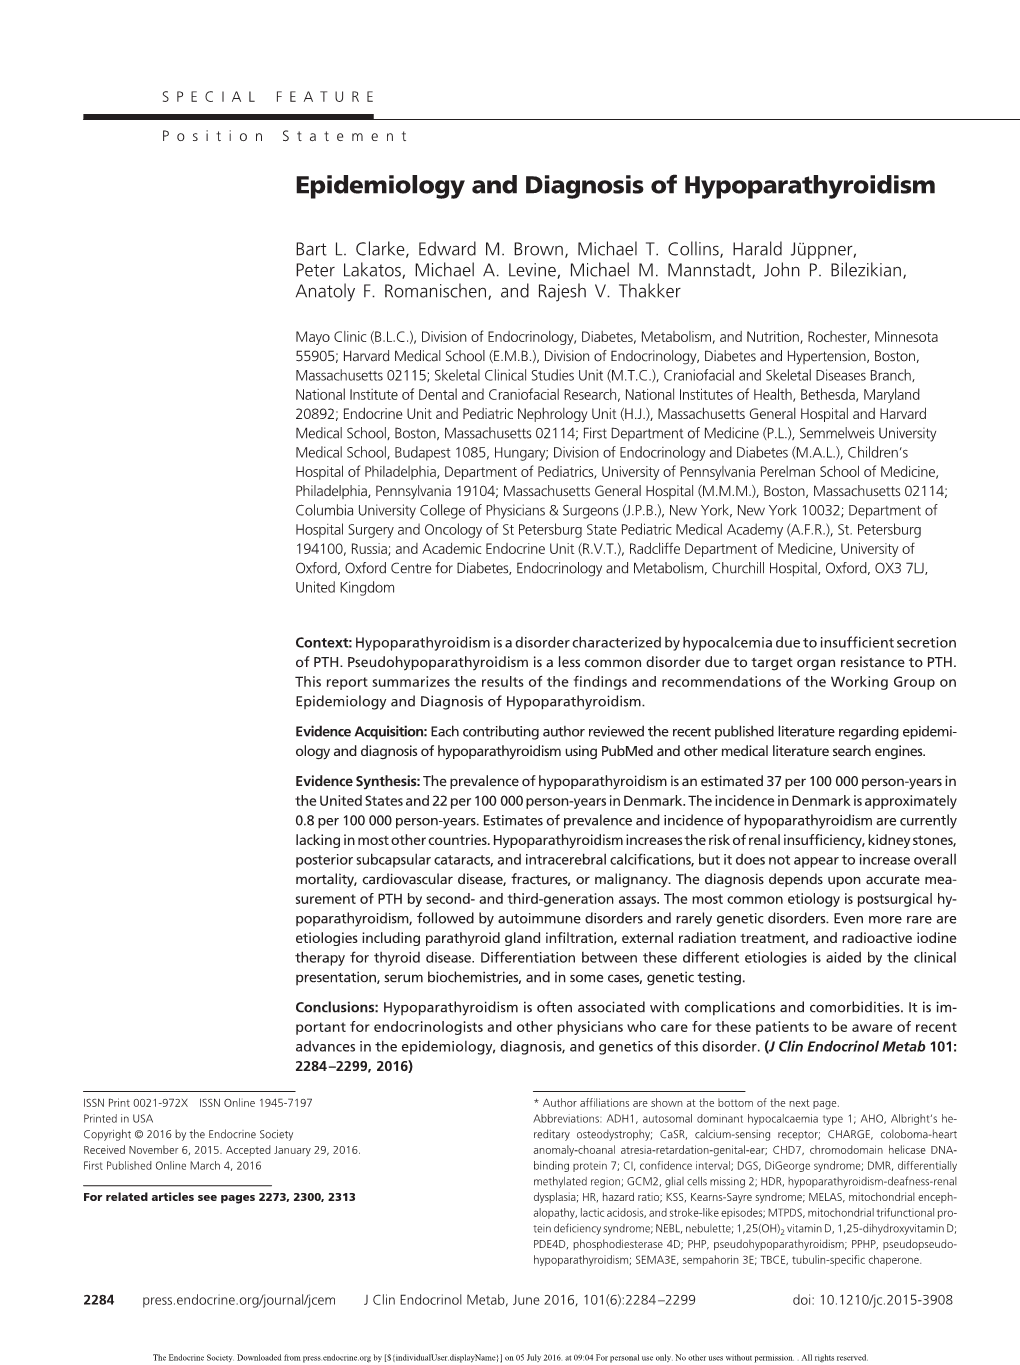 Epidemiology and Diagnosis of Hypoparathyroidism